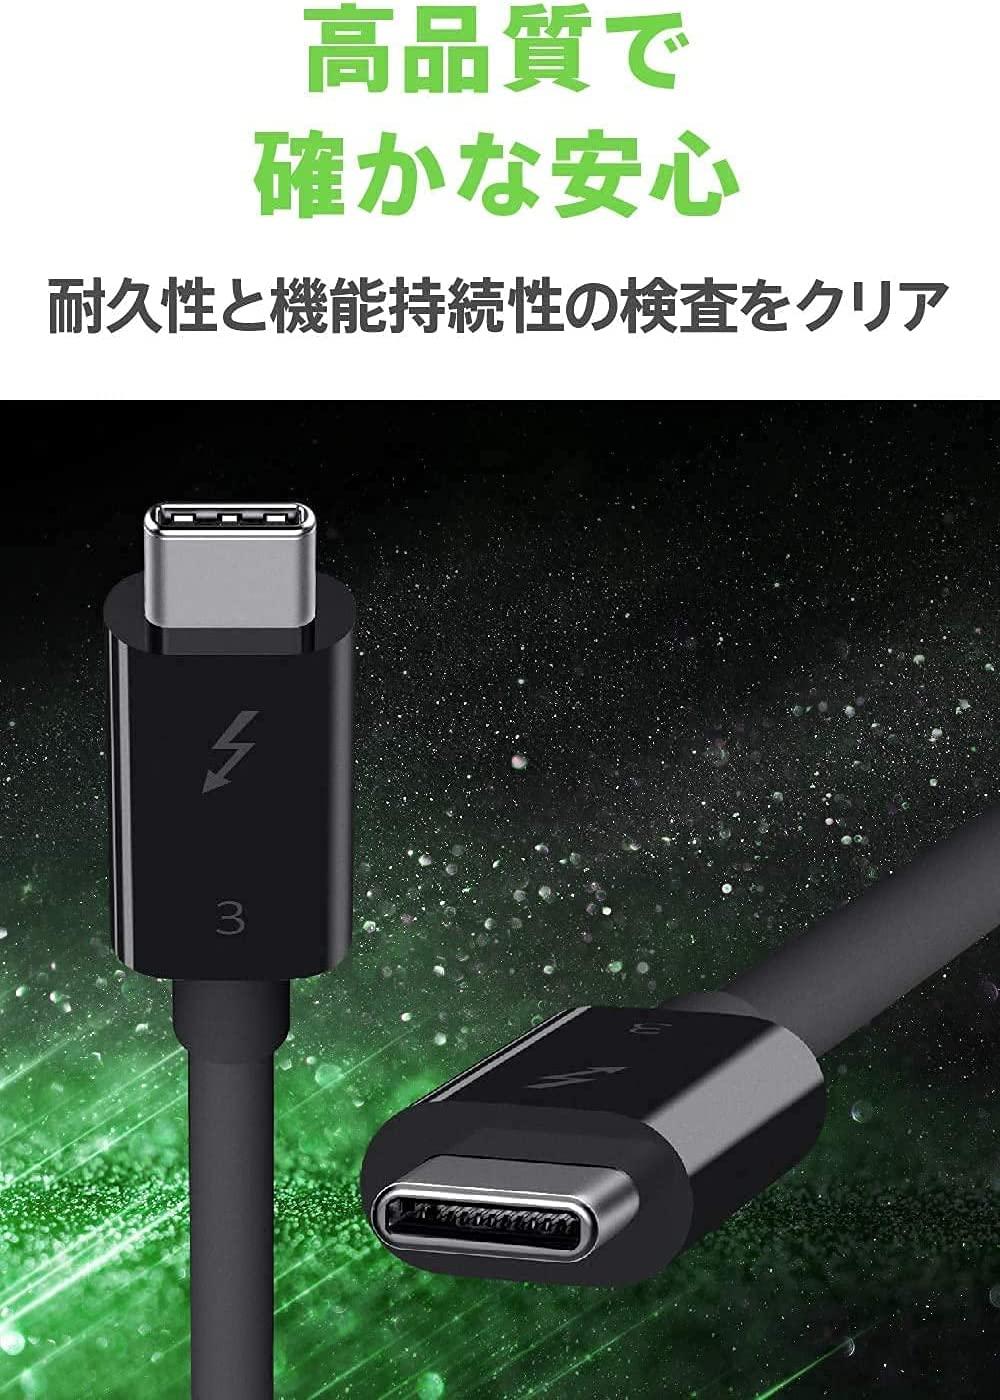 instock] Belkin F2CD084bt0.5MBK Thunderbolt 3 USB-C to USB-C Cable